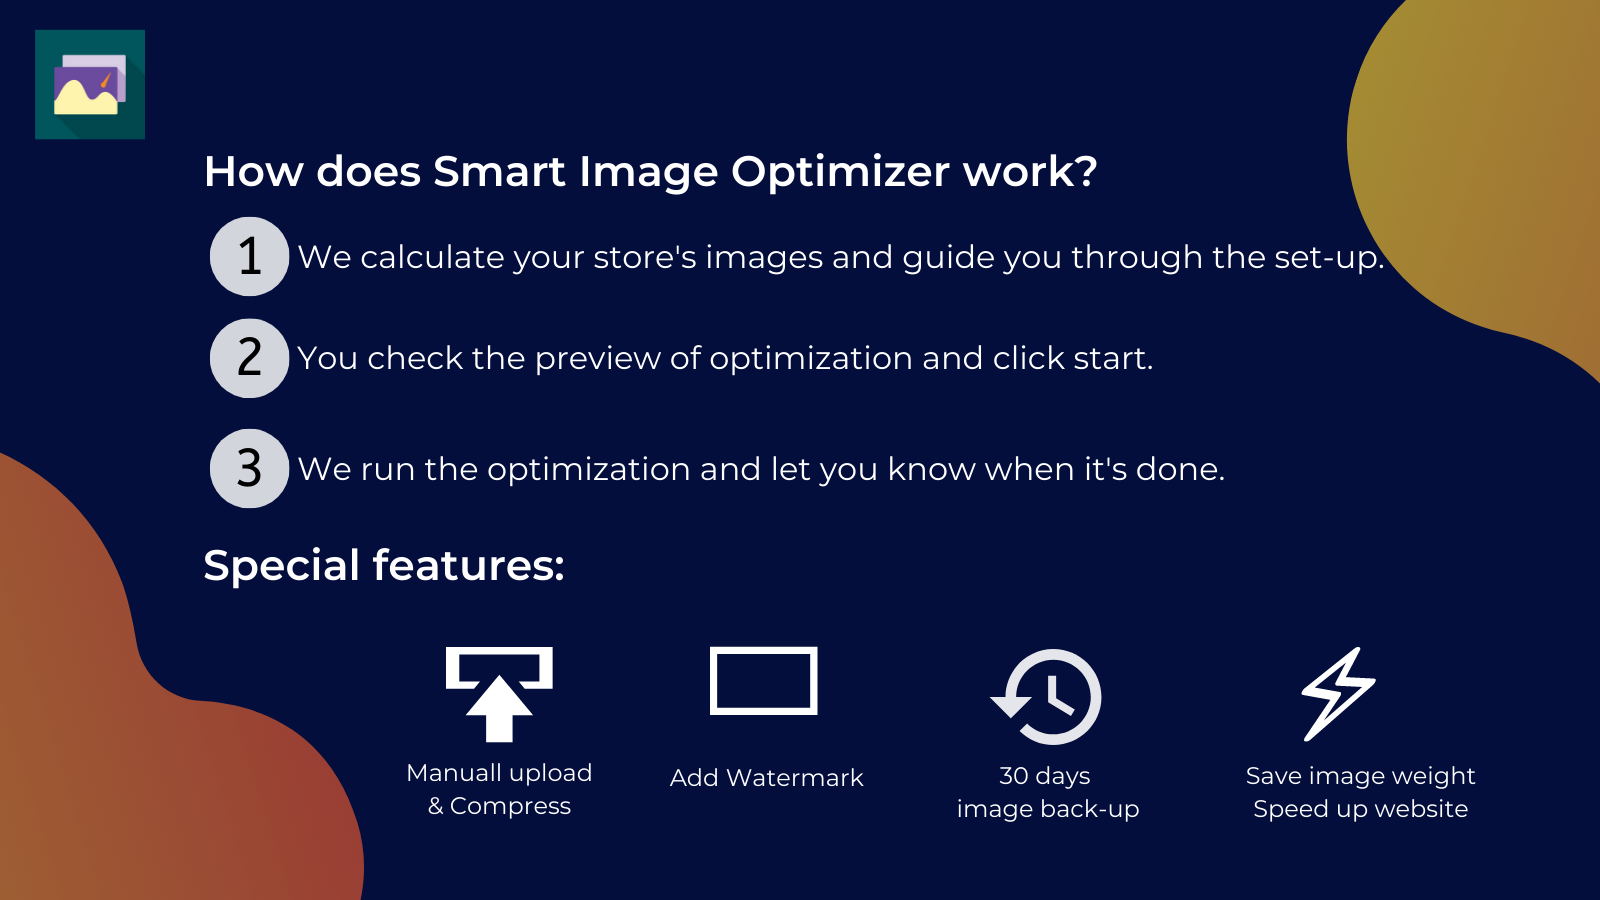 How does Smart Image Optimizer work?